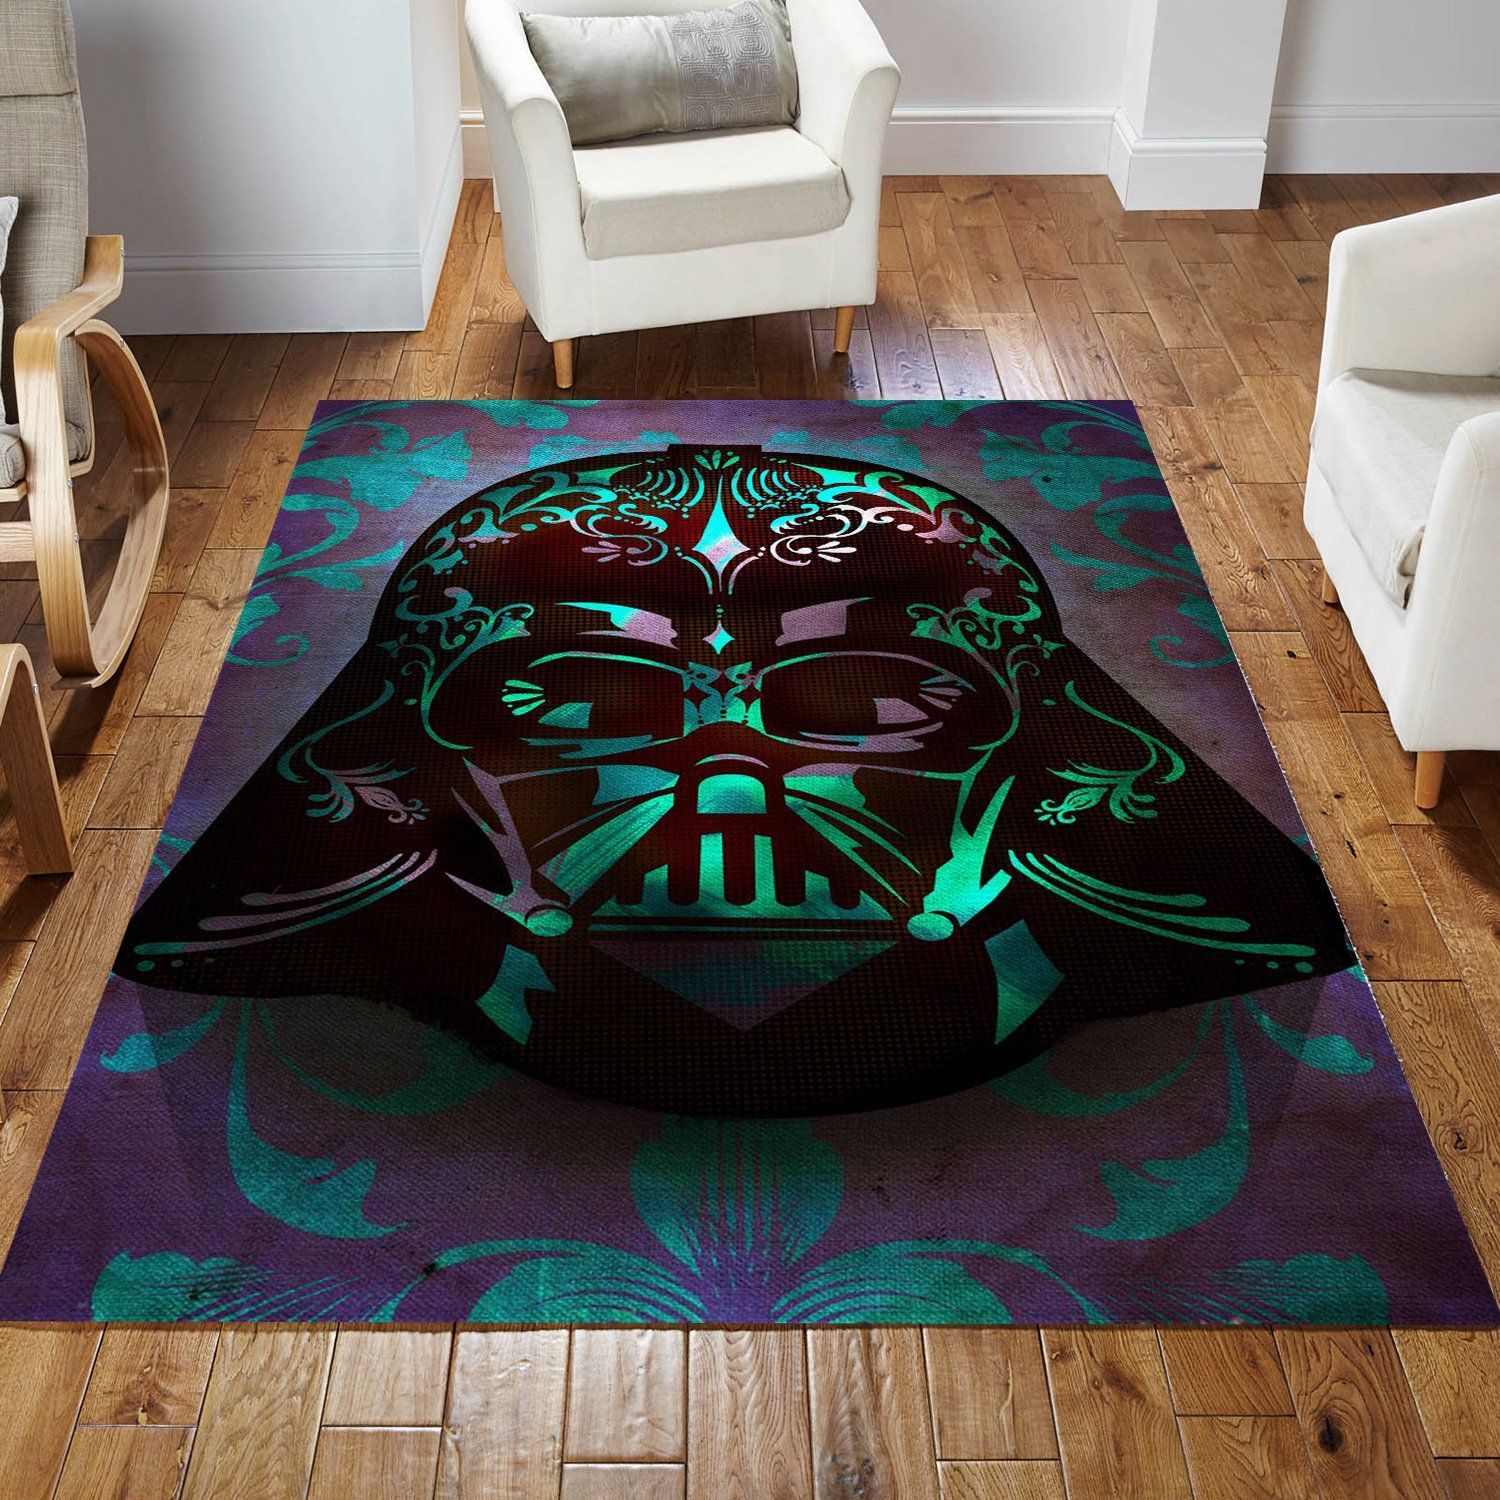 Star Wars Darth Vader Rugs Area Rug Living Room Bedroom Flannel Floor Mat Carpet 